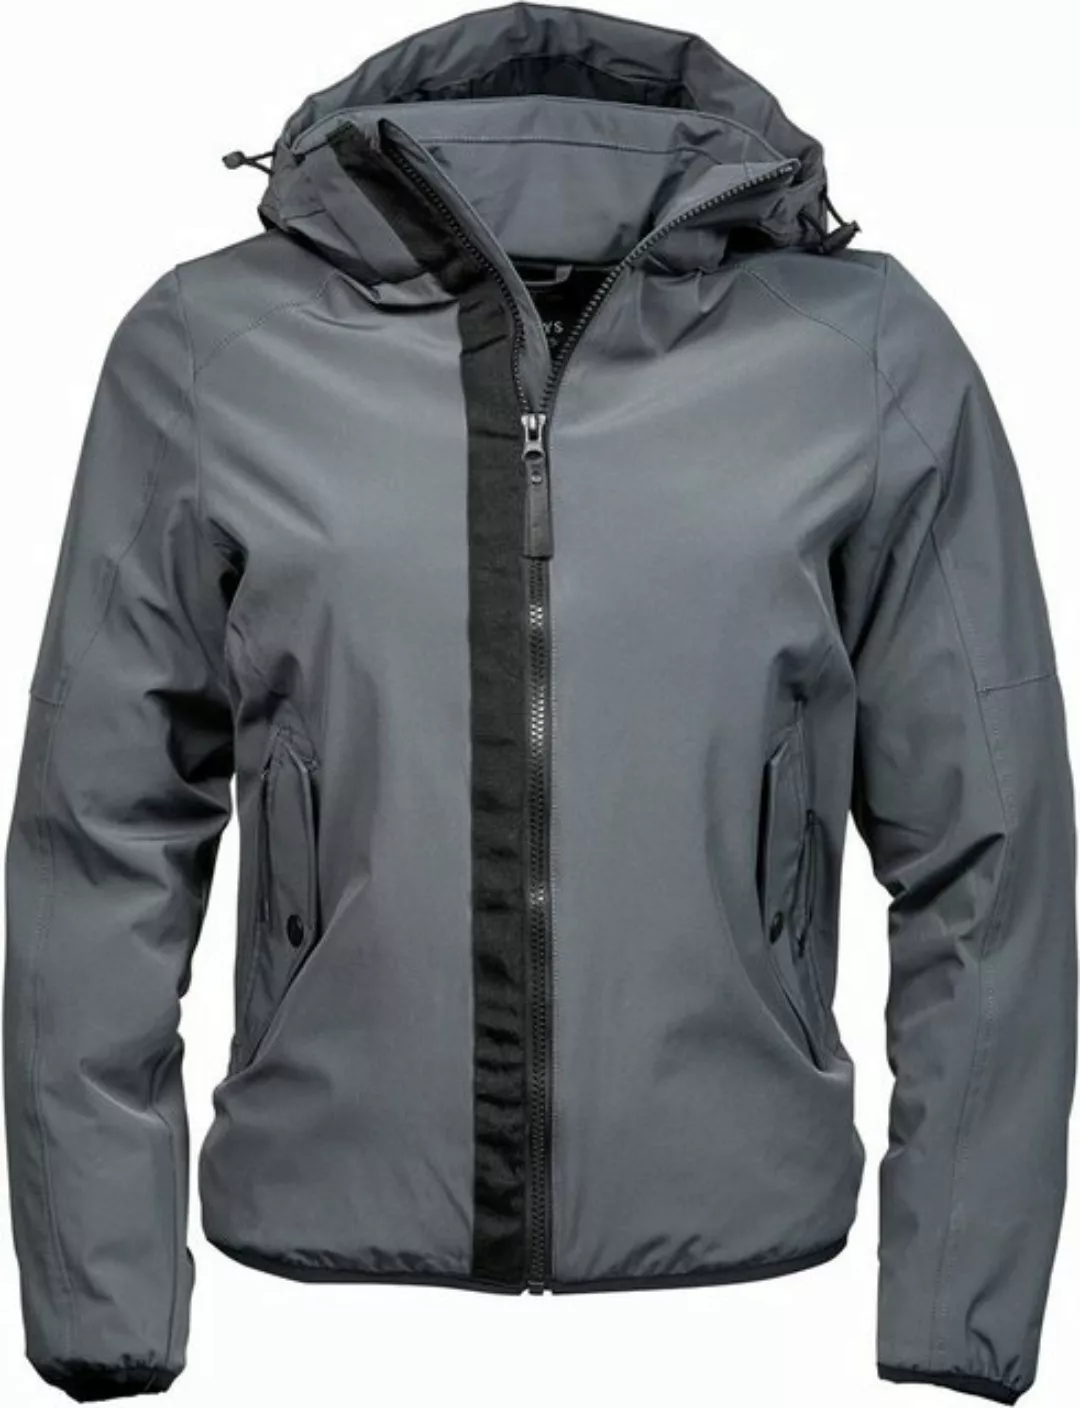 Tee Jays Outdoorjacke 9605 Urban Adventure Jacke günstig online kaufen